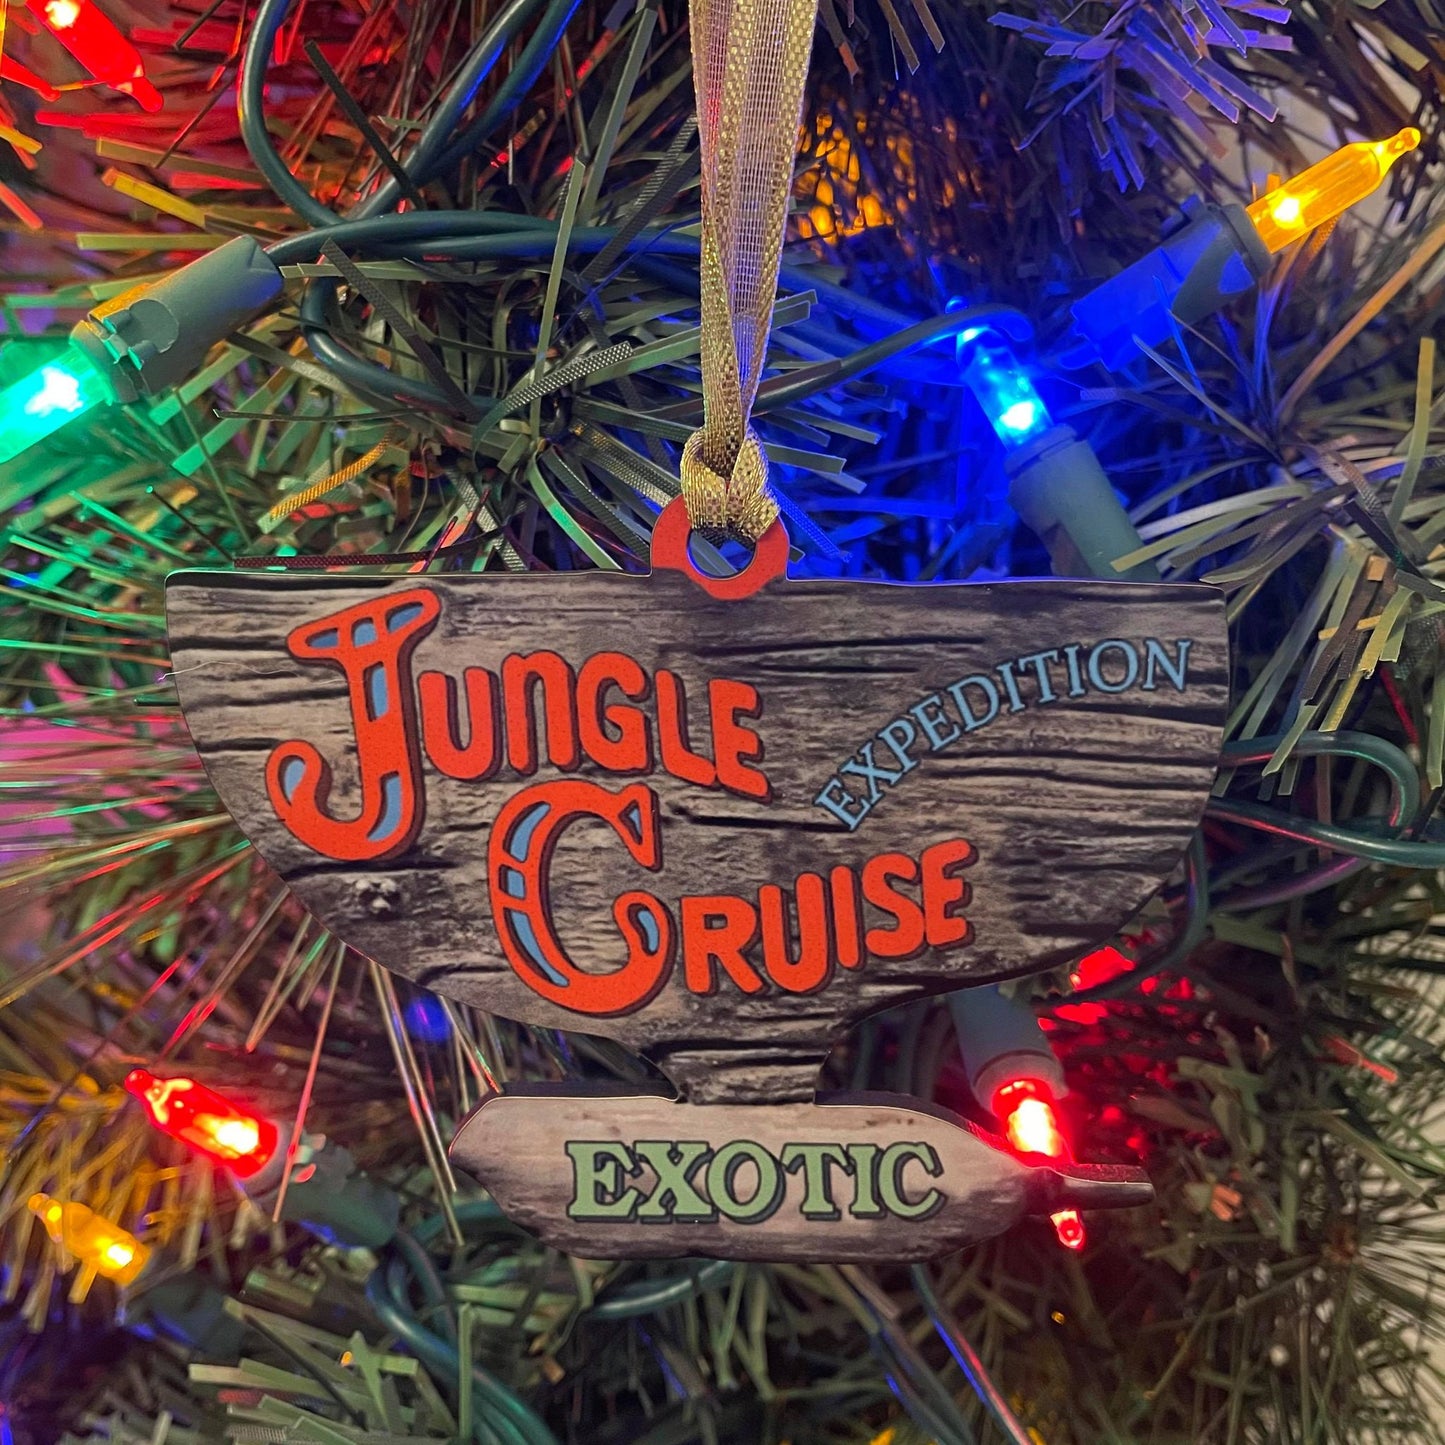 Jungle Cruise Holiday Ornament